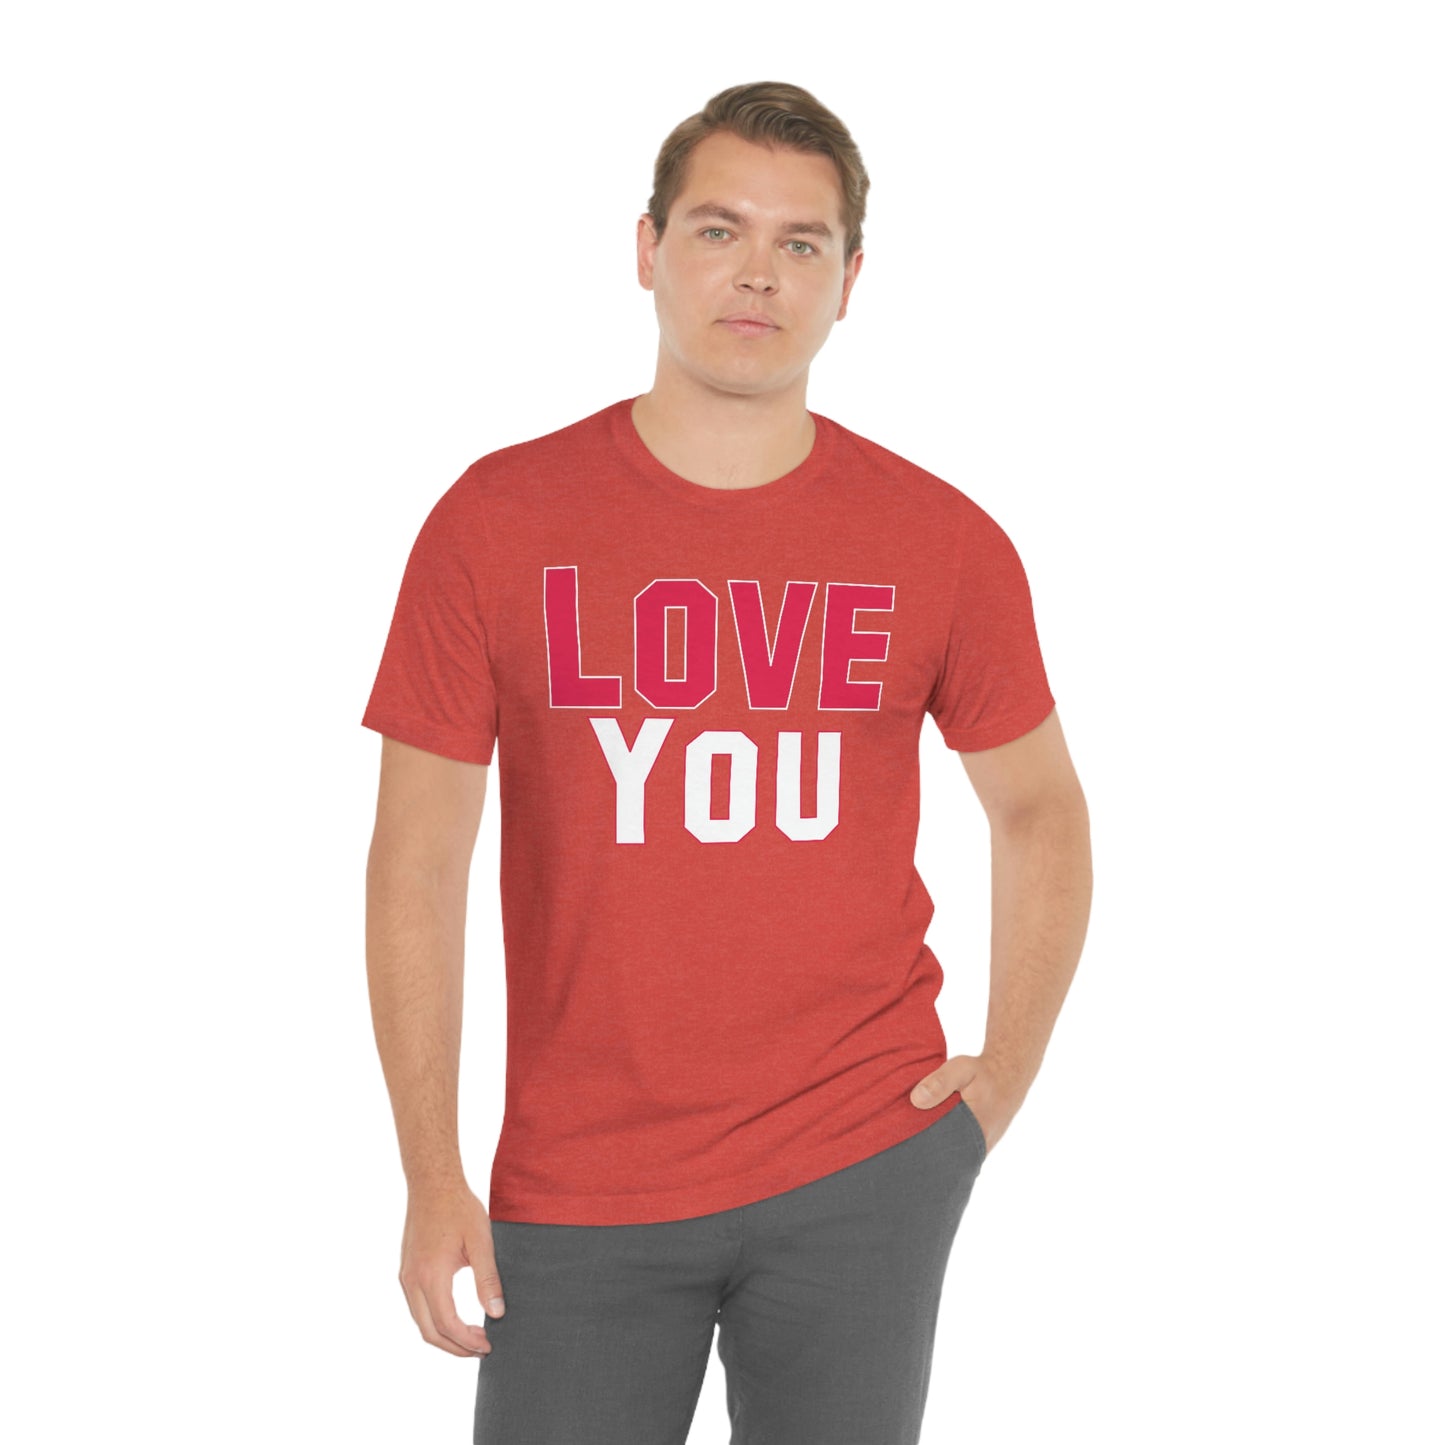 Love you T-shirt